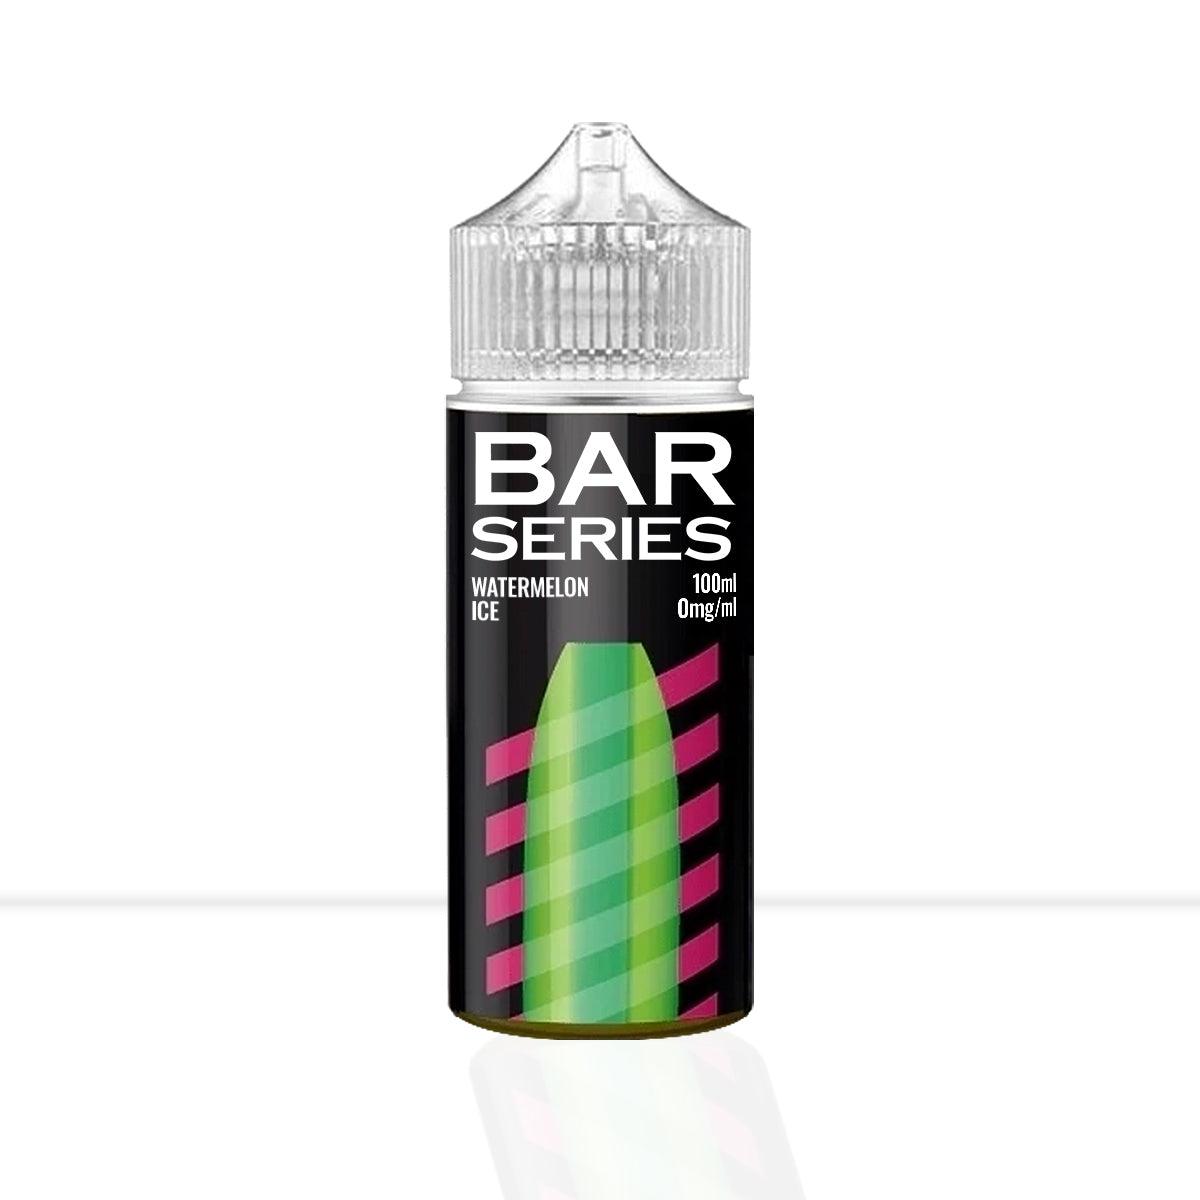 Watermelon Ice Shortfill E-Liquid Bar Series - E Liquid